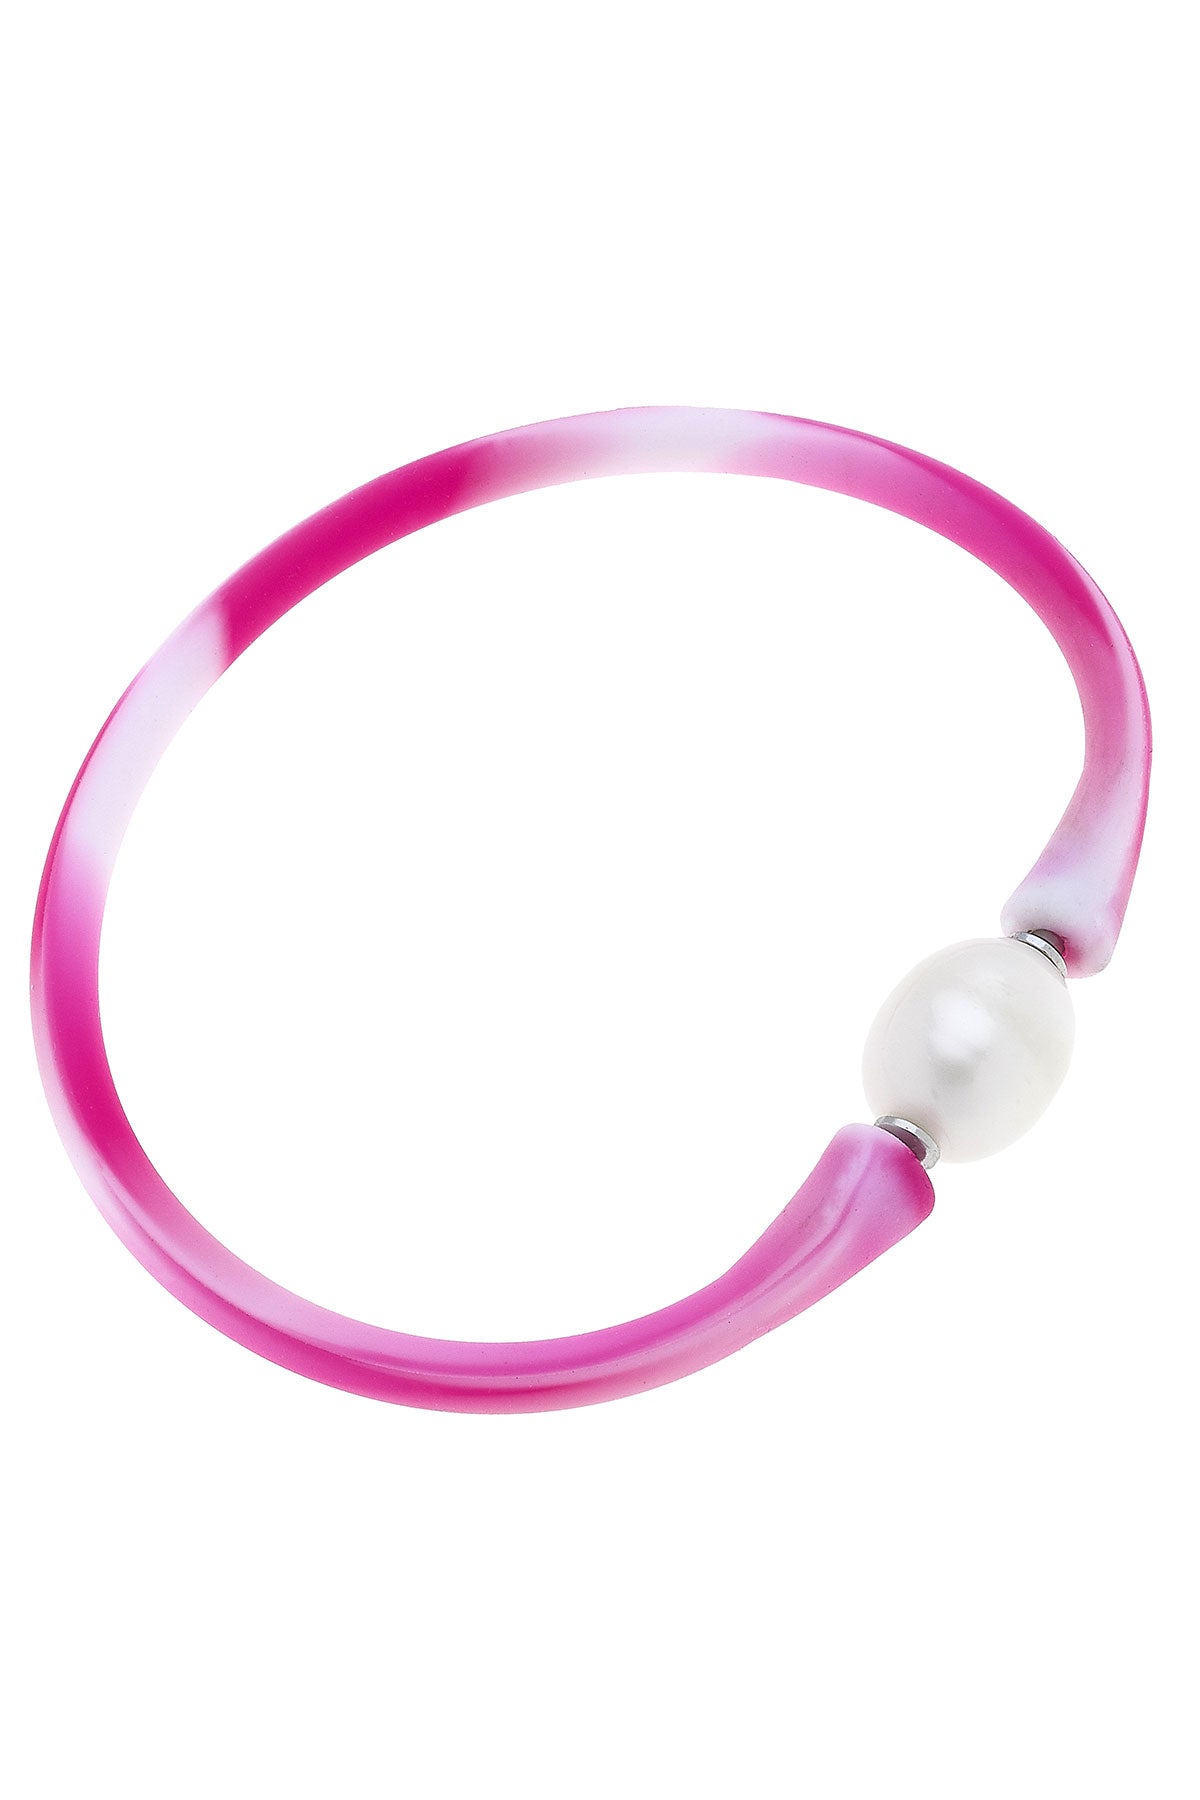 Bali Freshwater Pearl Silicone Bracelet in Tie Dye Pink